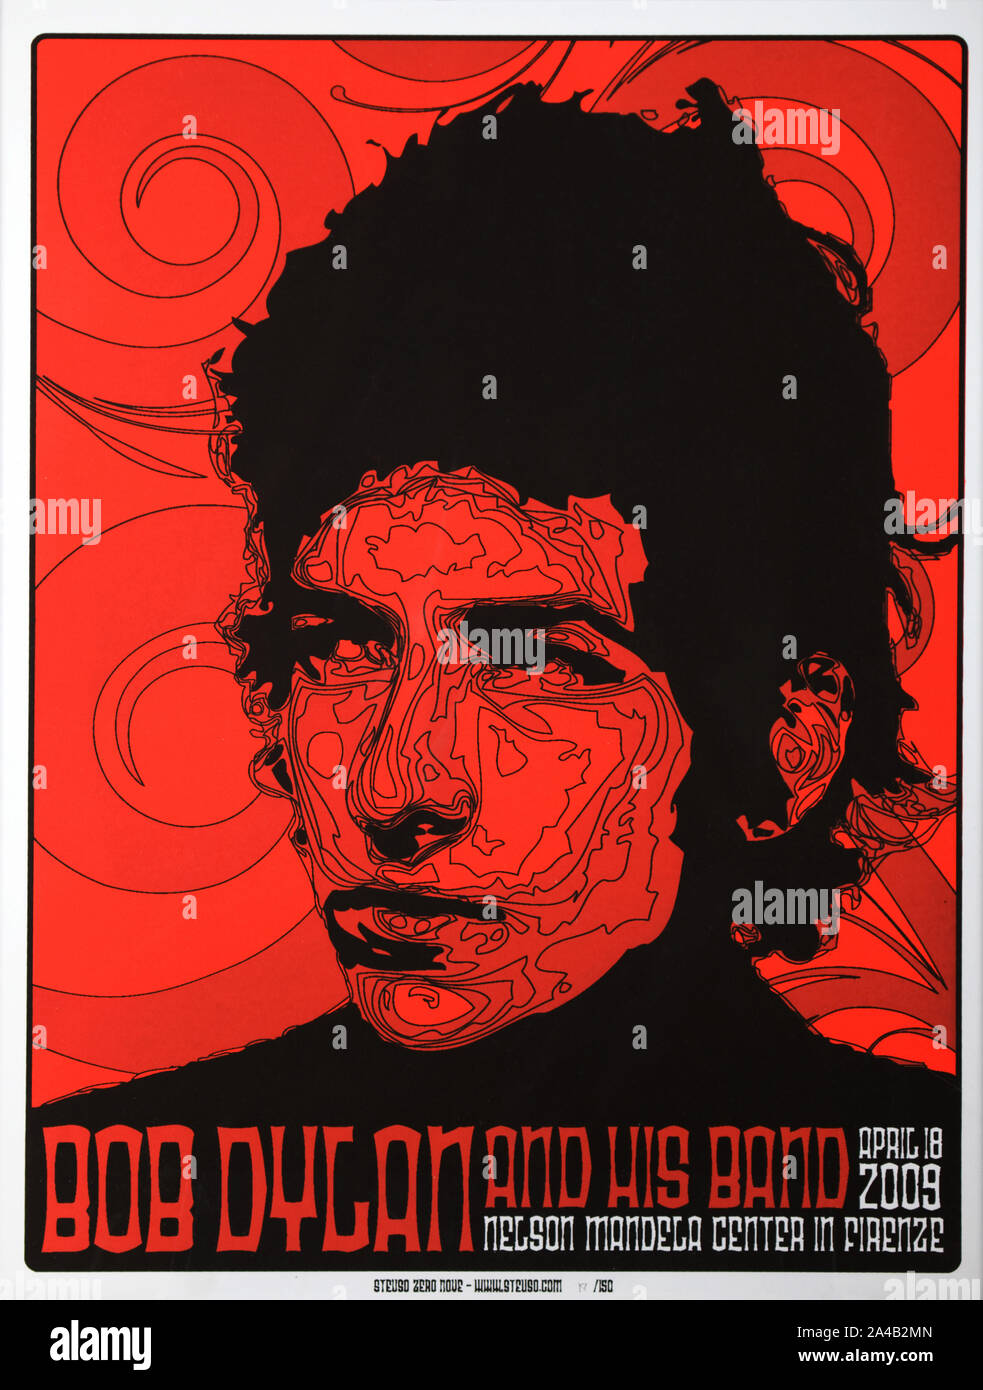 Bob Dylan e la sua band poster concerto, Firenze, Firenze Foto Stock